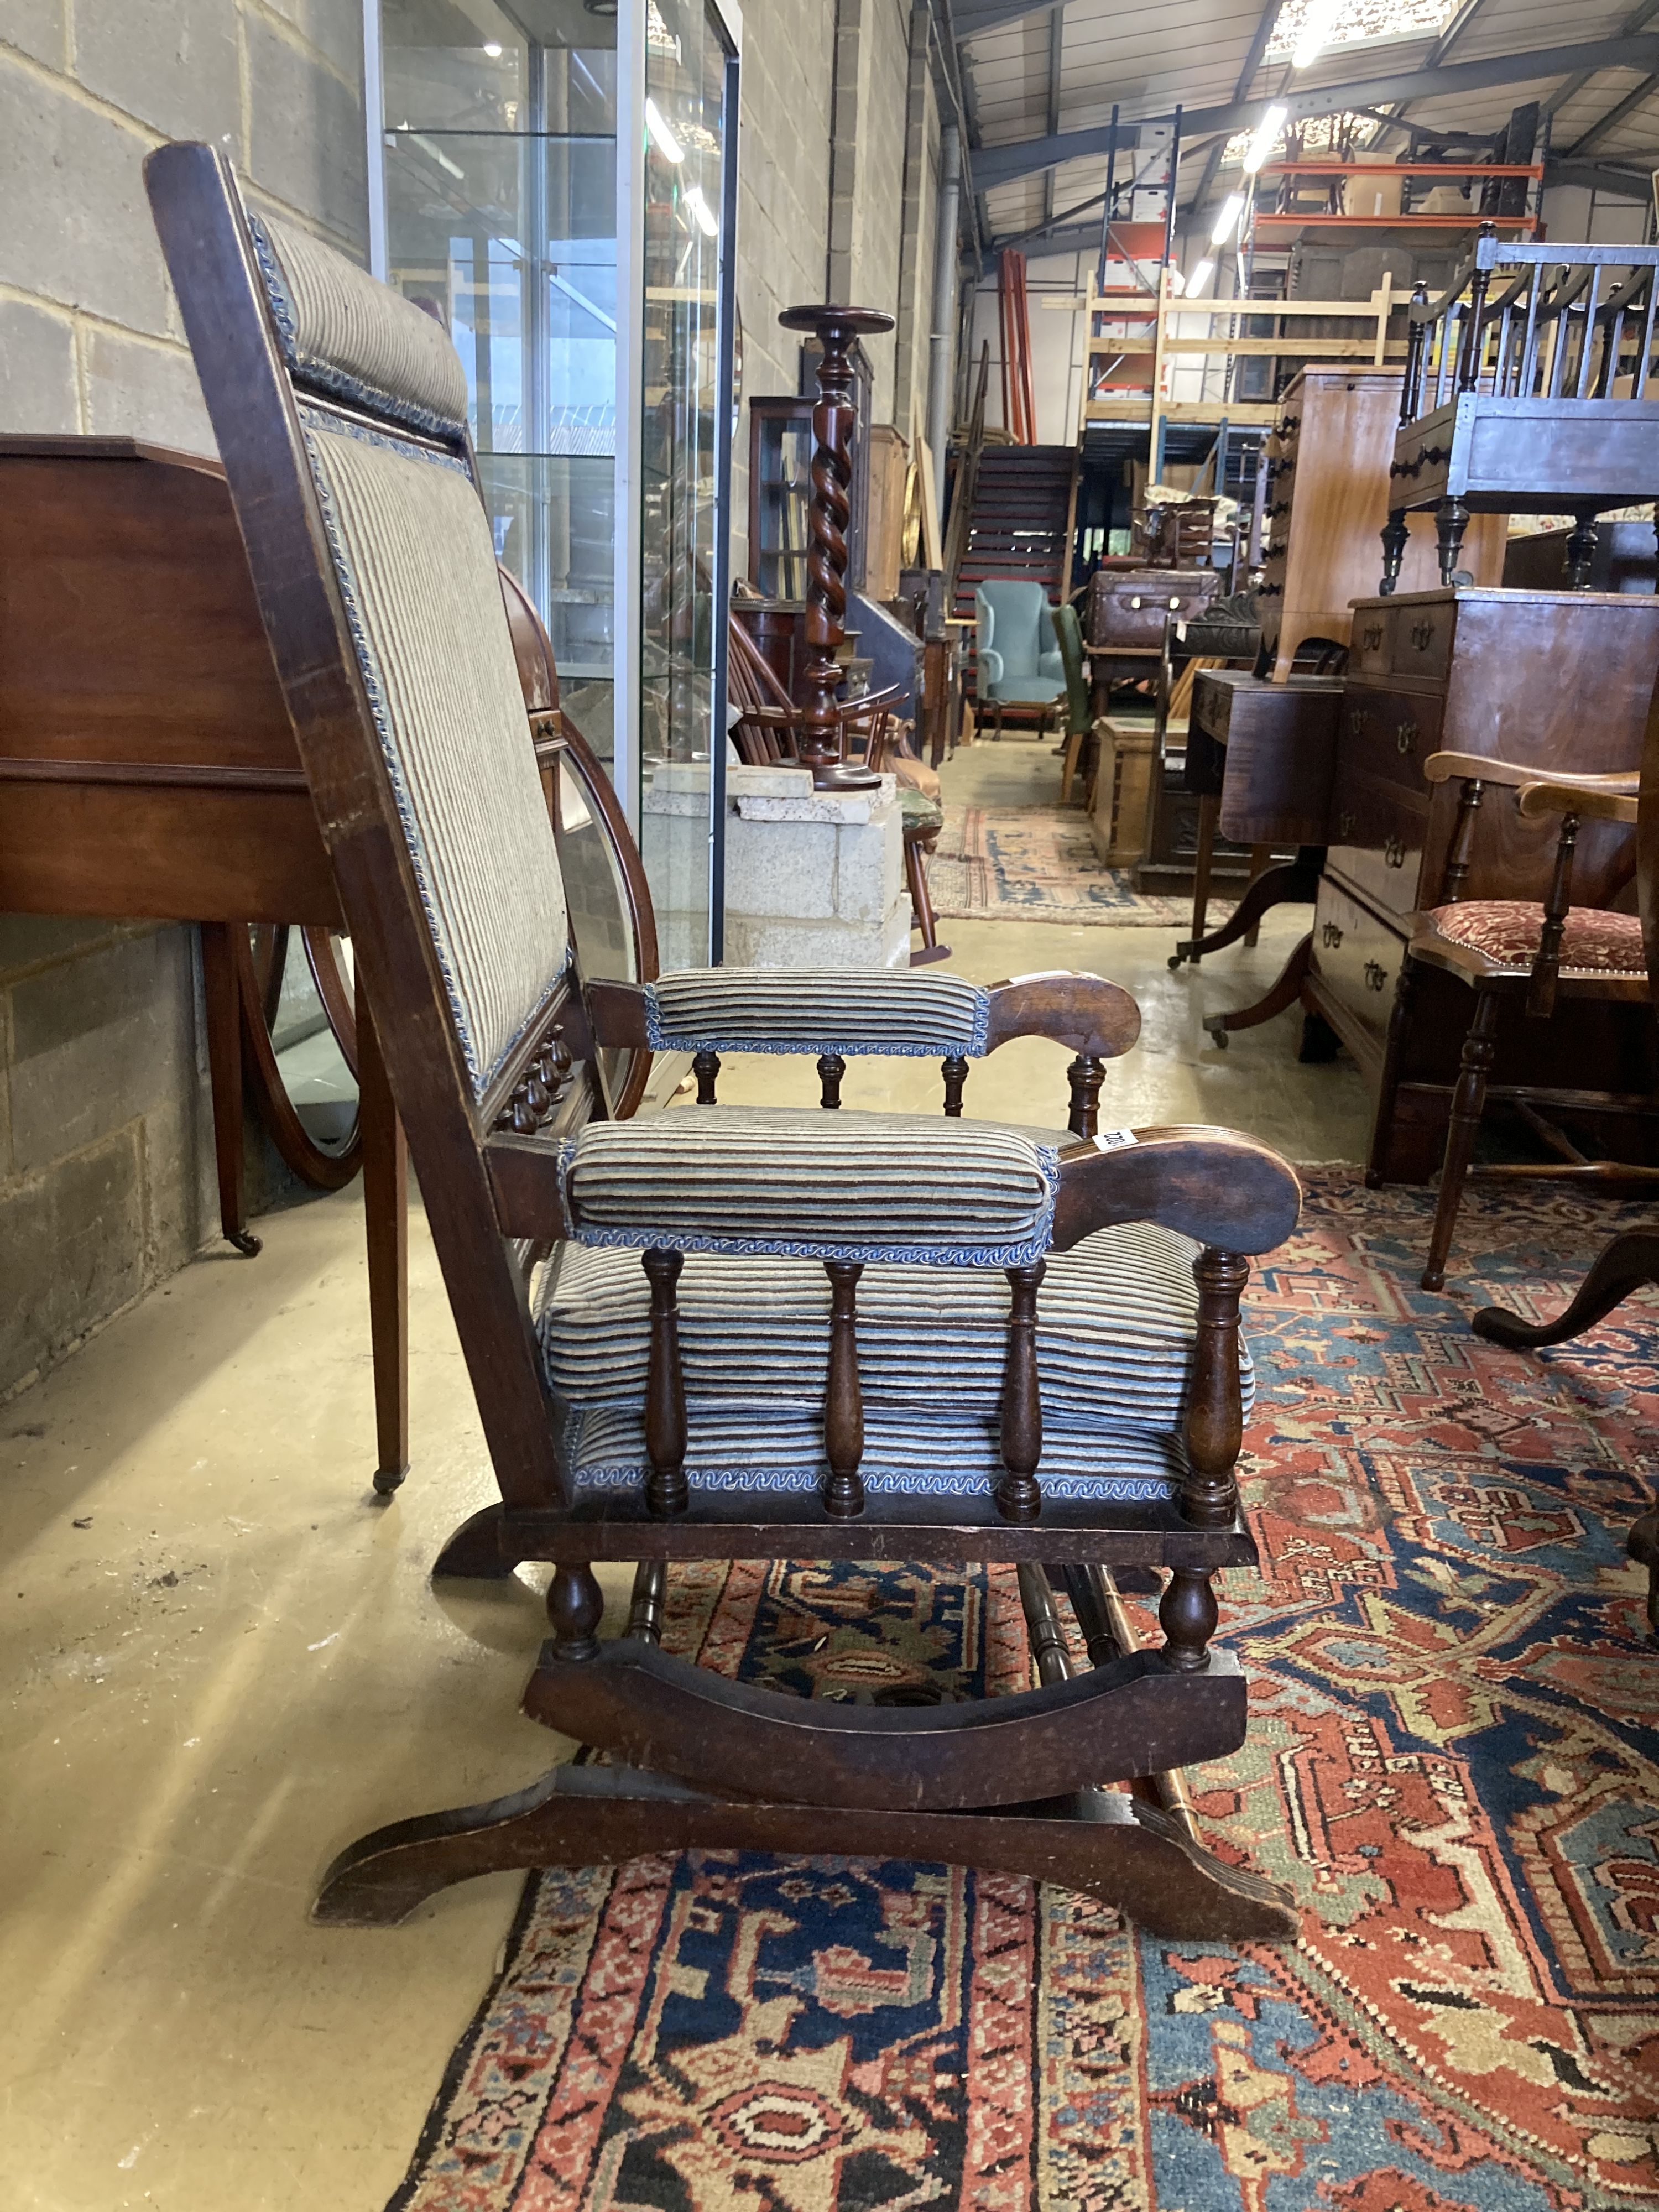 An early 20th century American mahogany rocking chair, width 60cm, depth 52cm, height 108cm